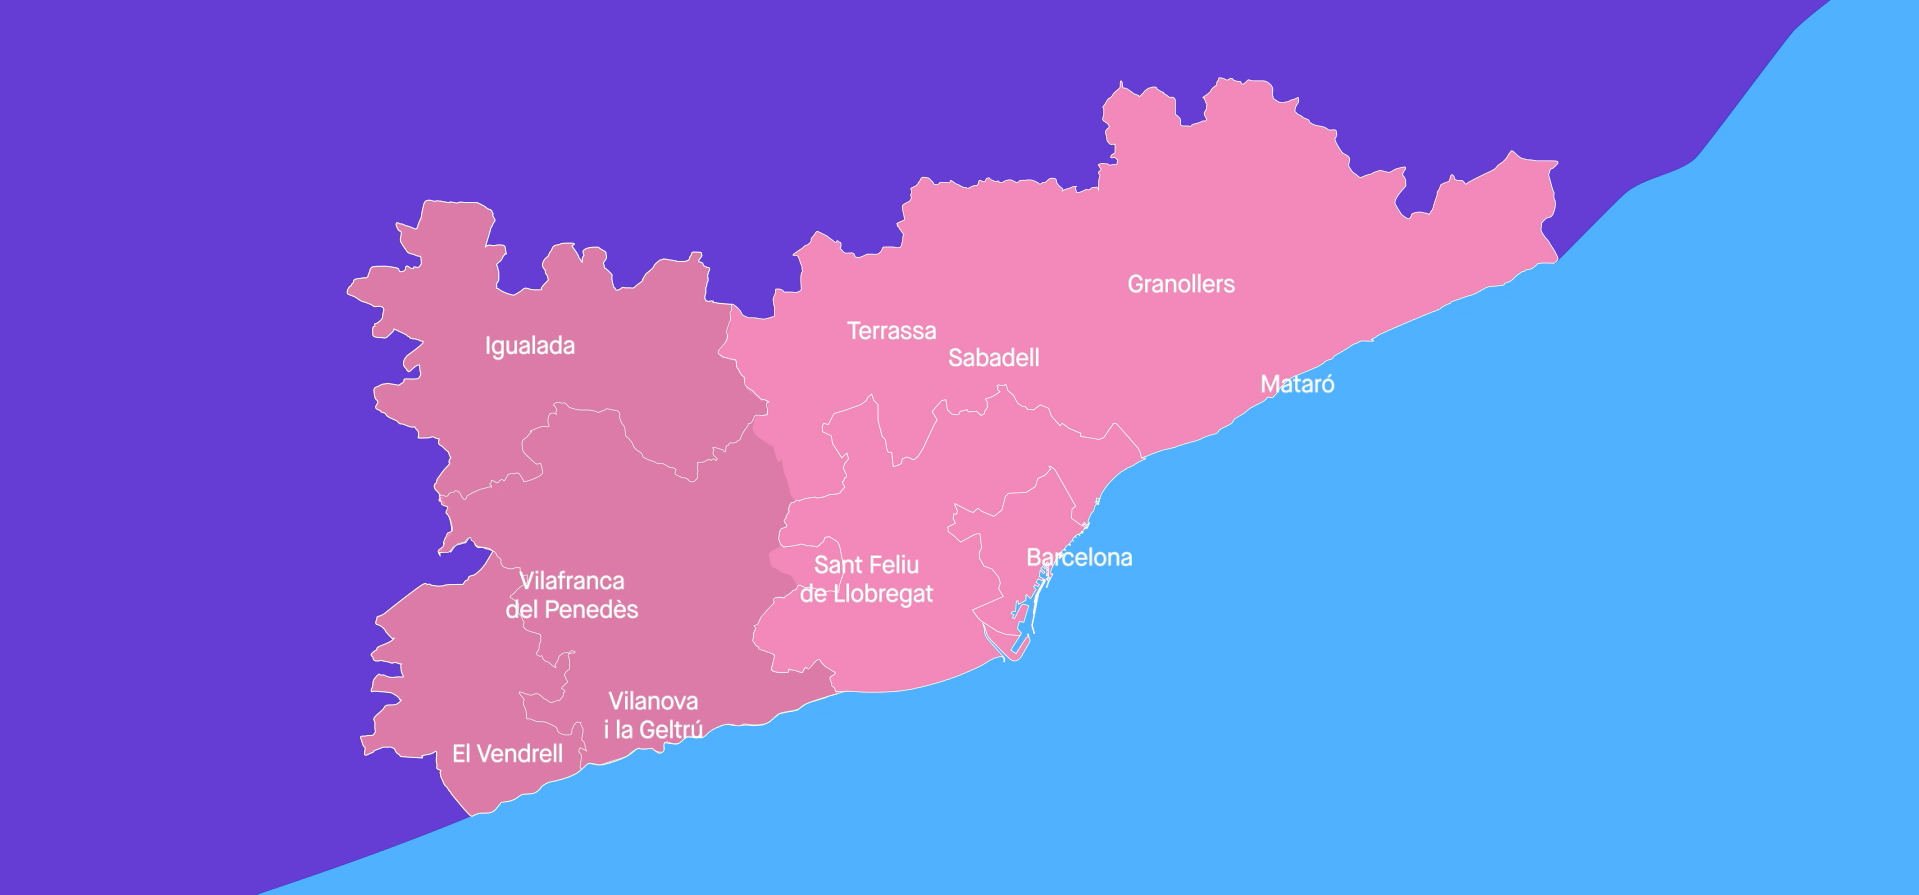 Mapa regió metropolitana de Barcelona